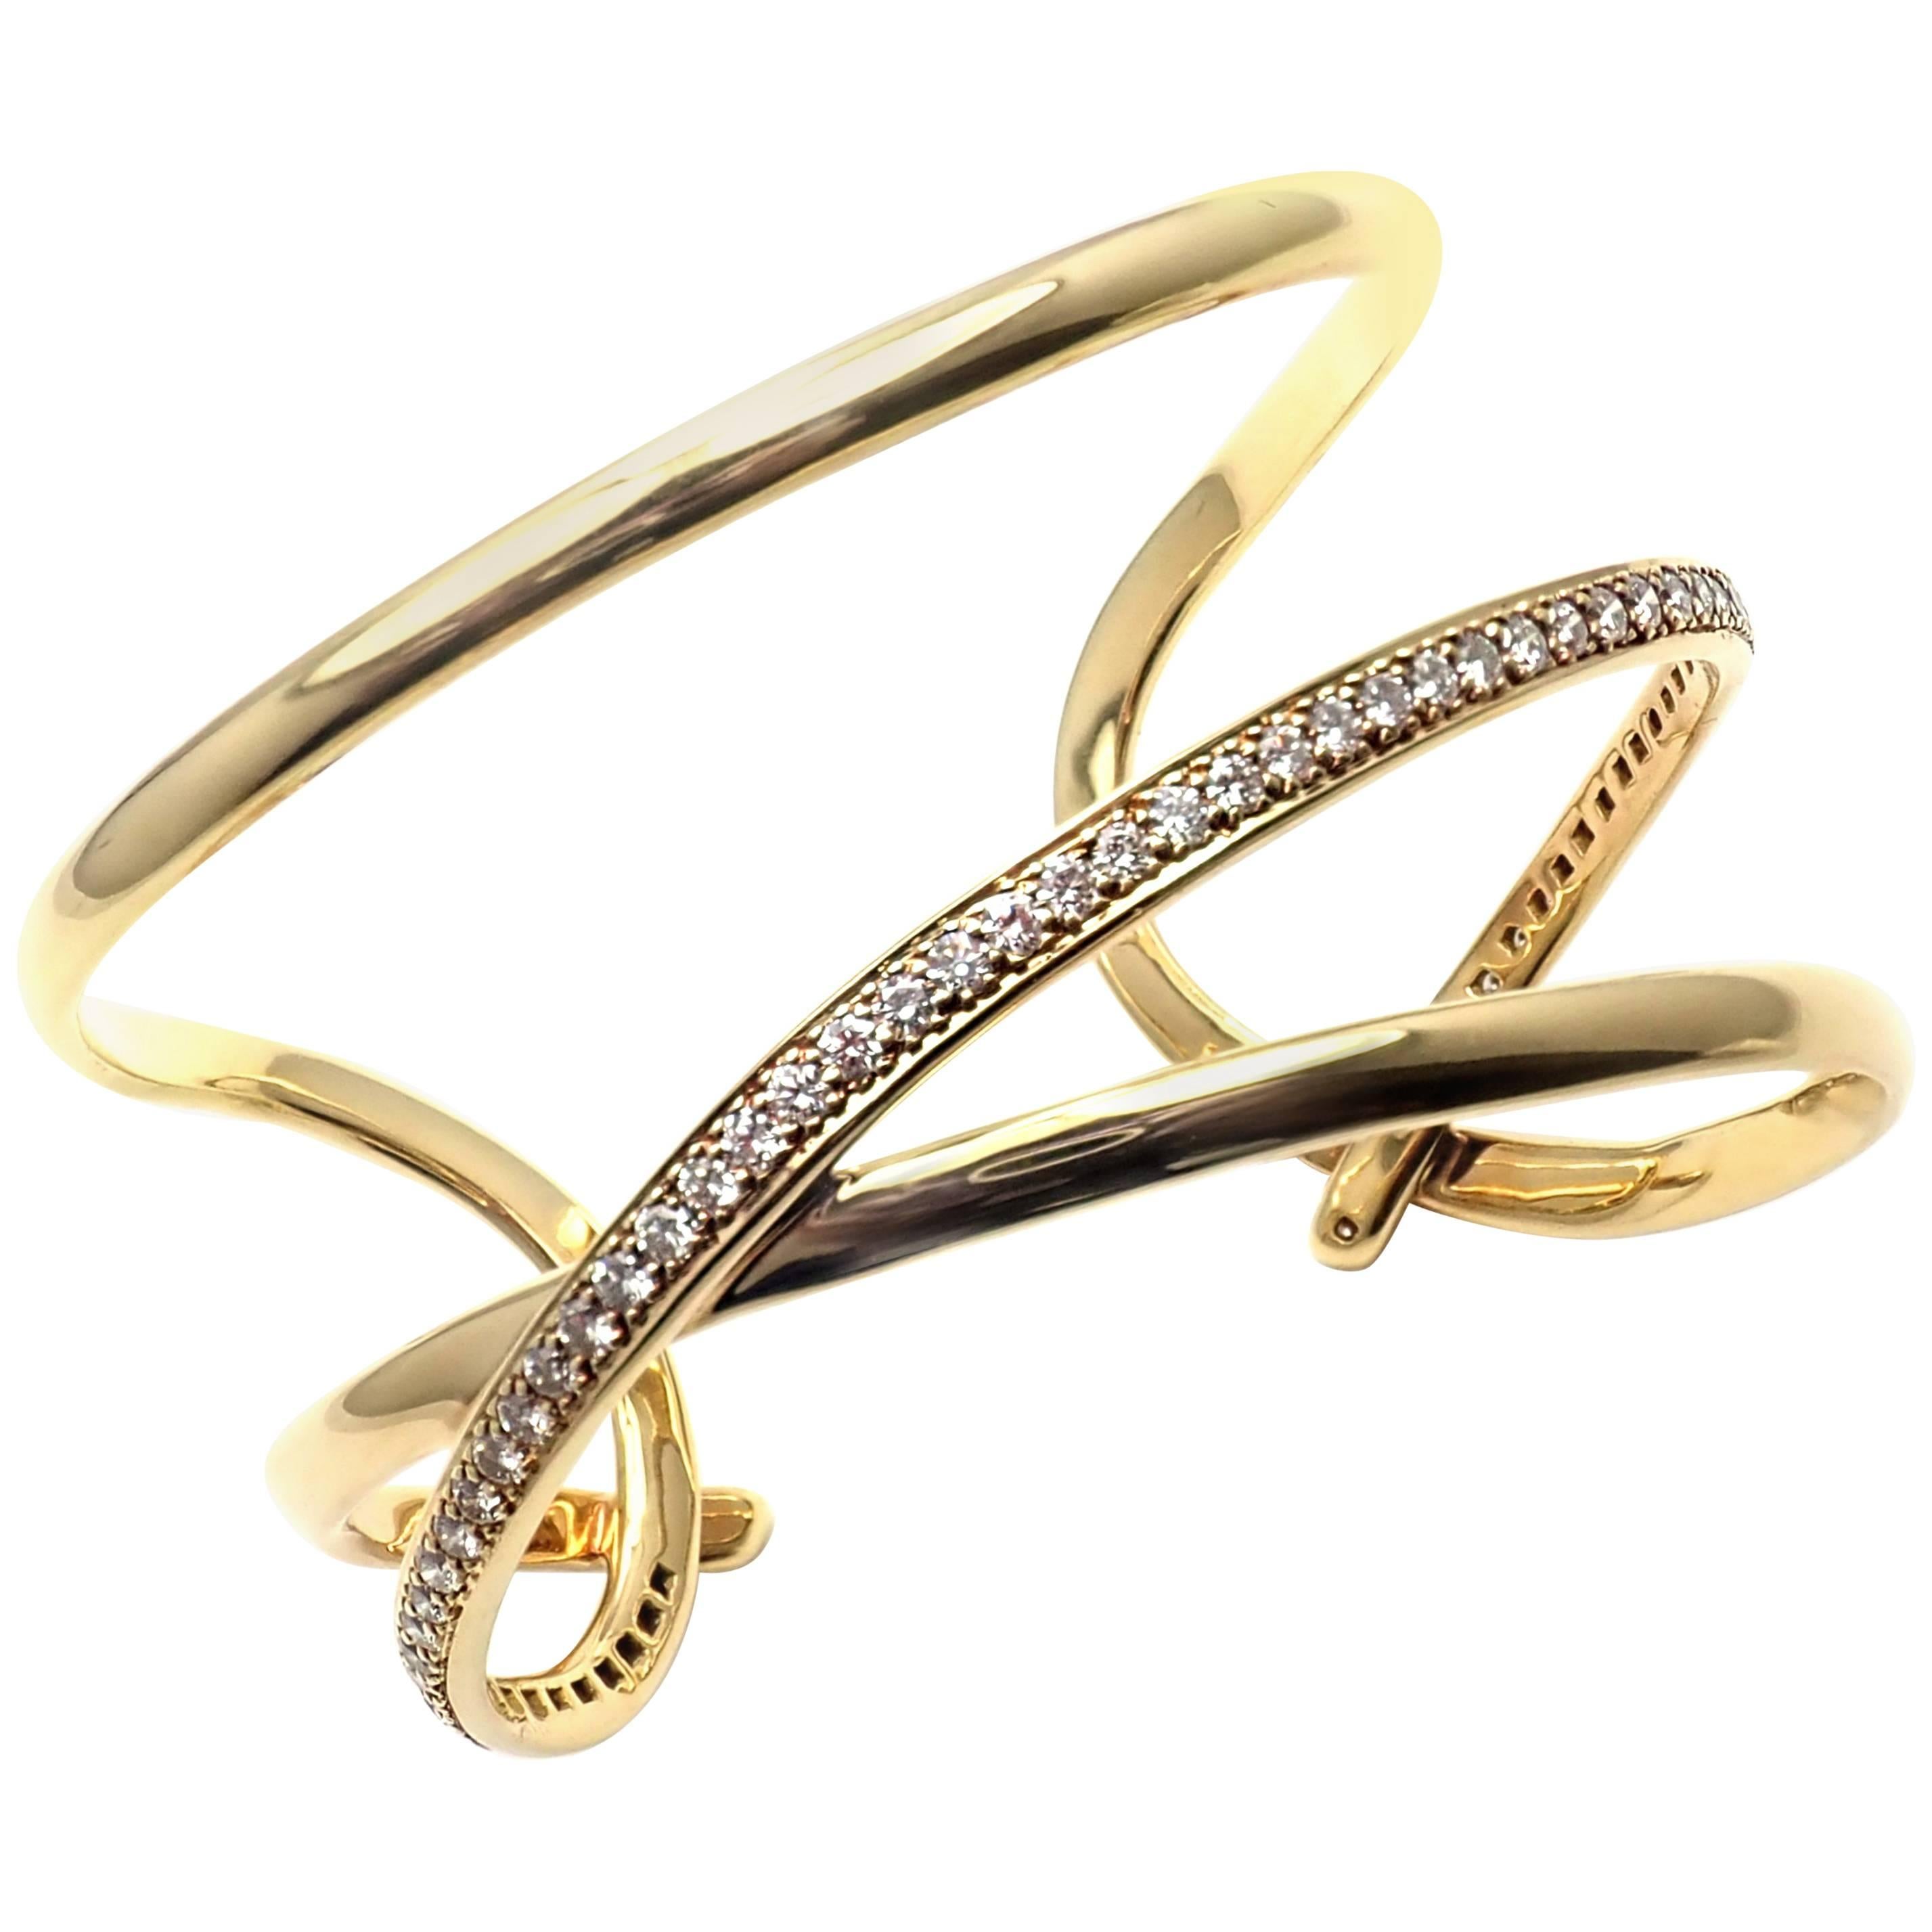 Tiffany & Co. Angela Cummings Diamond Yellow Gold Bangle Bracelet, 1980